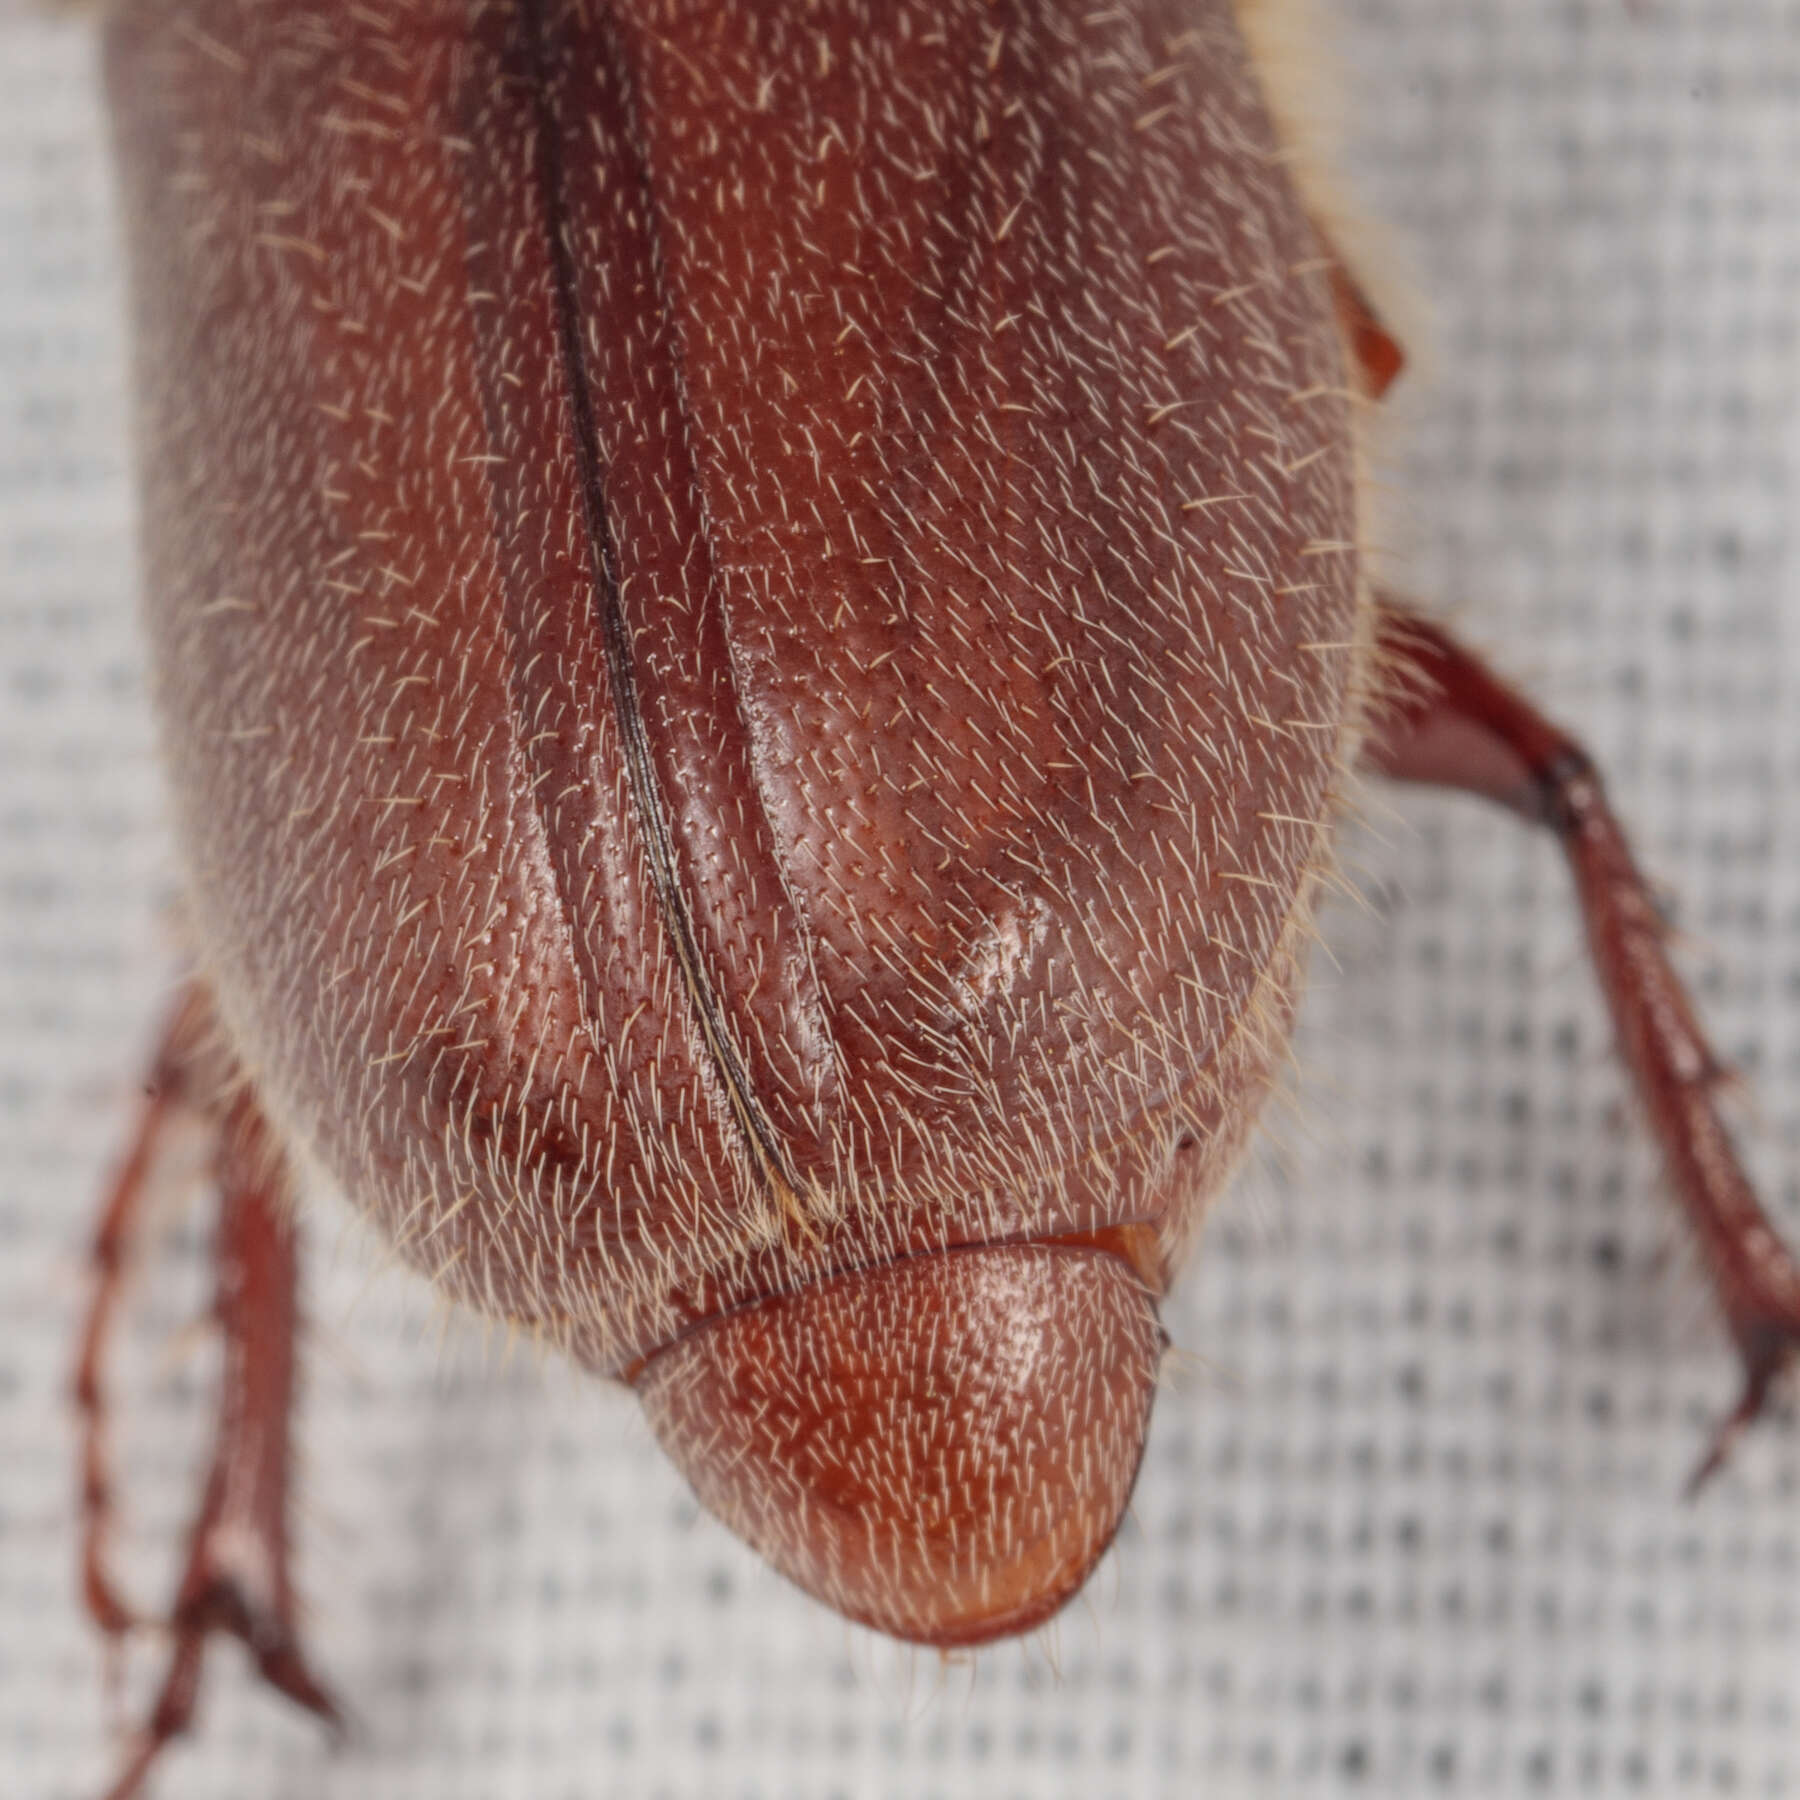 Image of Phyllophaga (Phyllophaga) rubiginosa (Le Conte 1856)